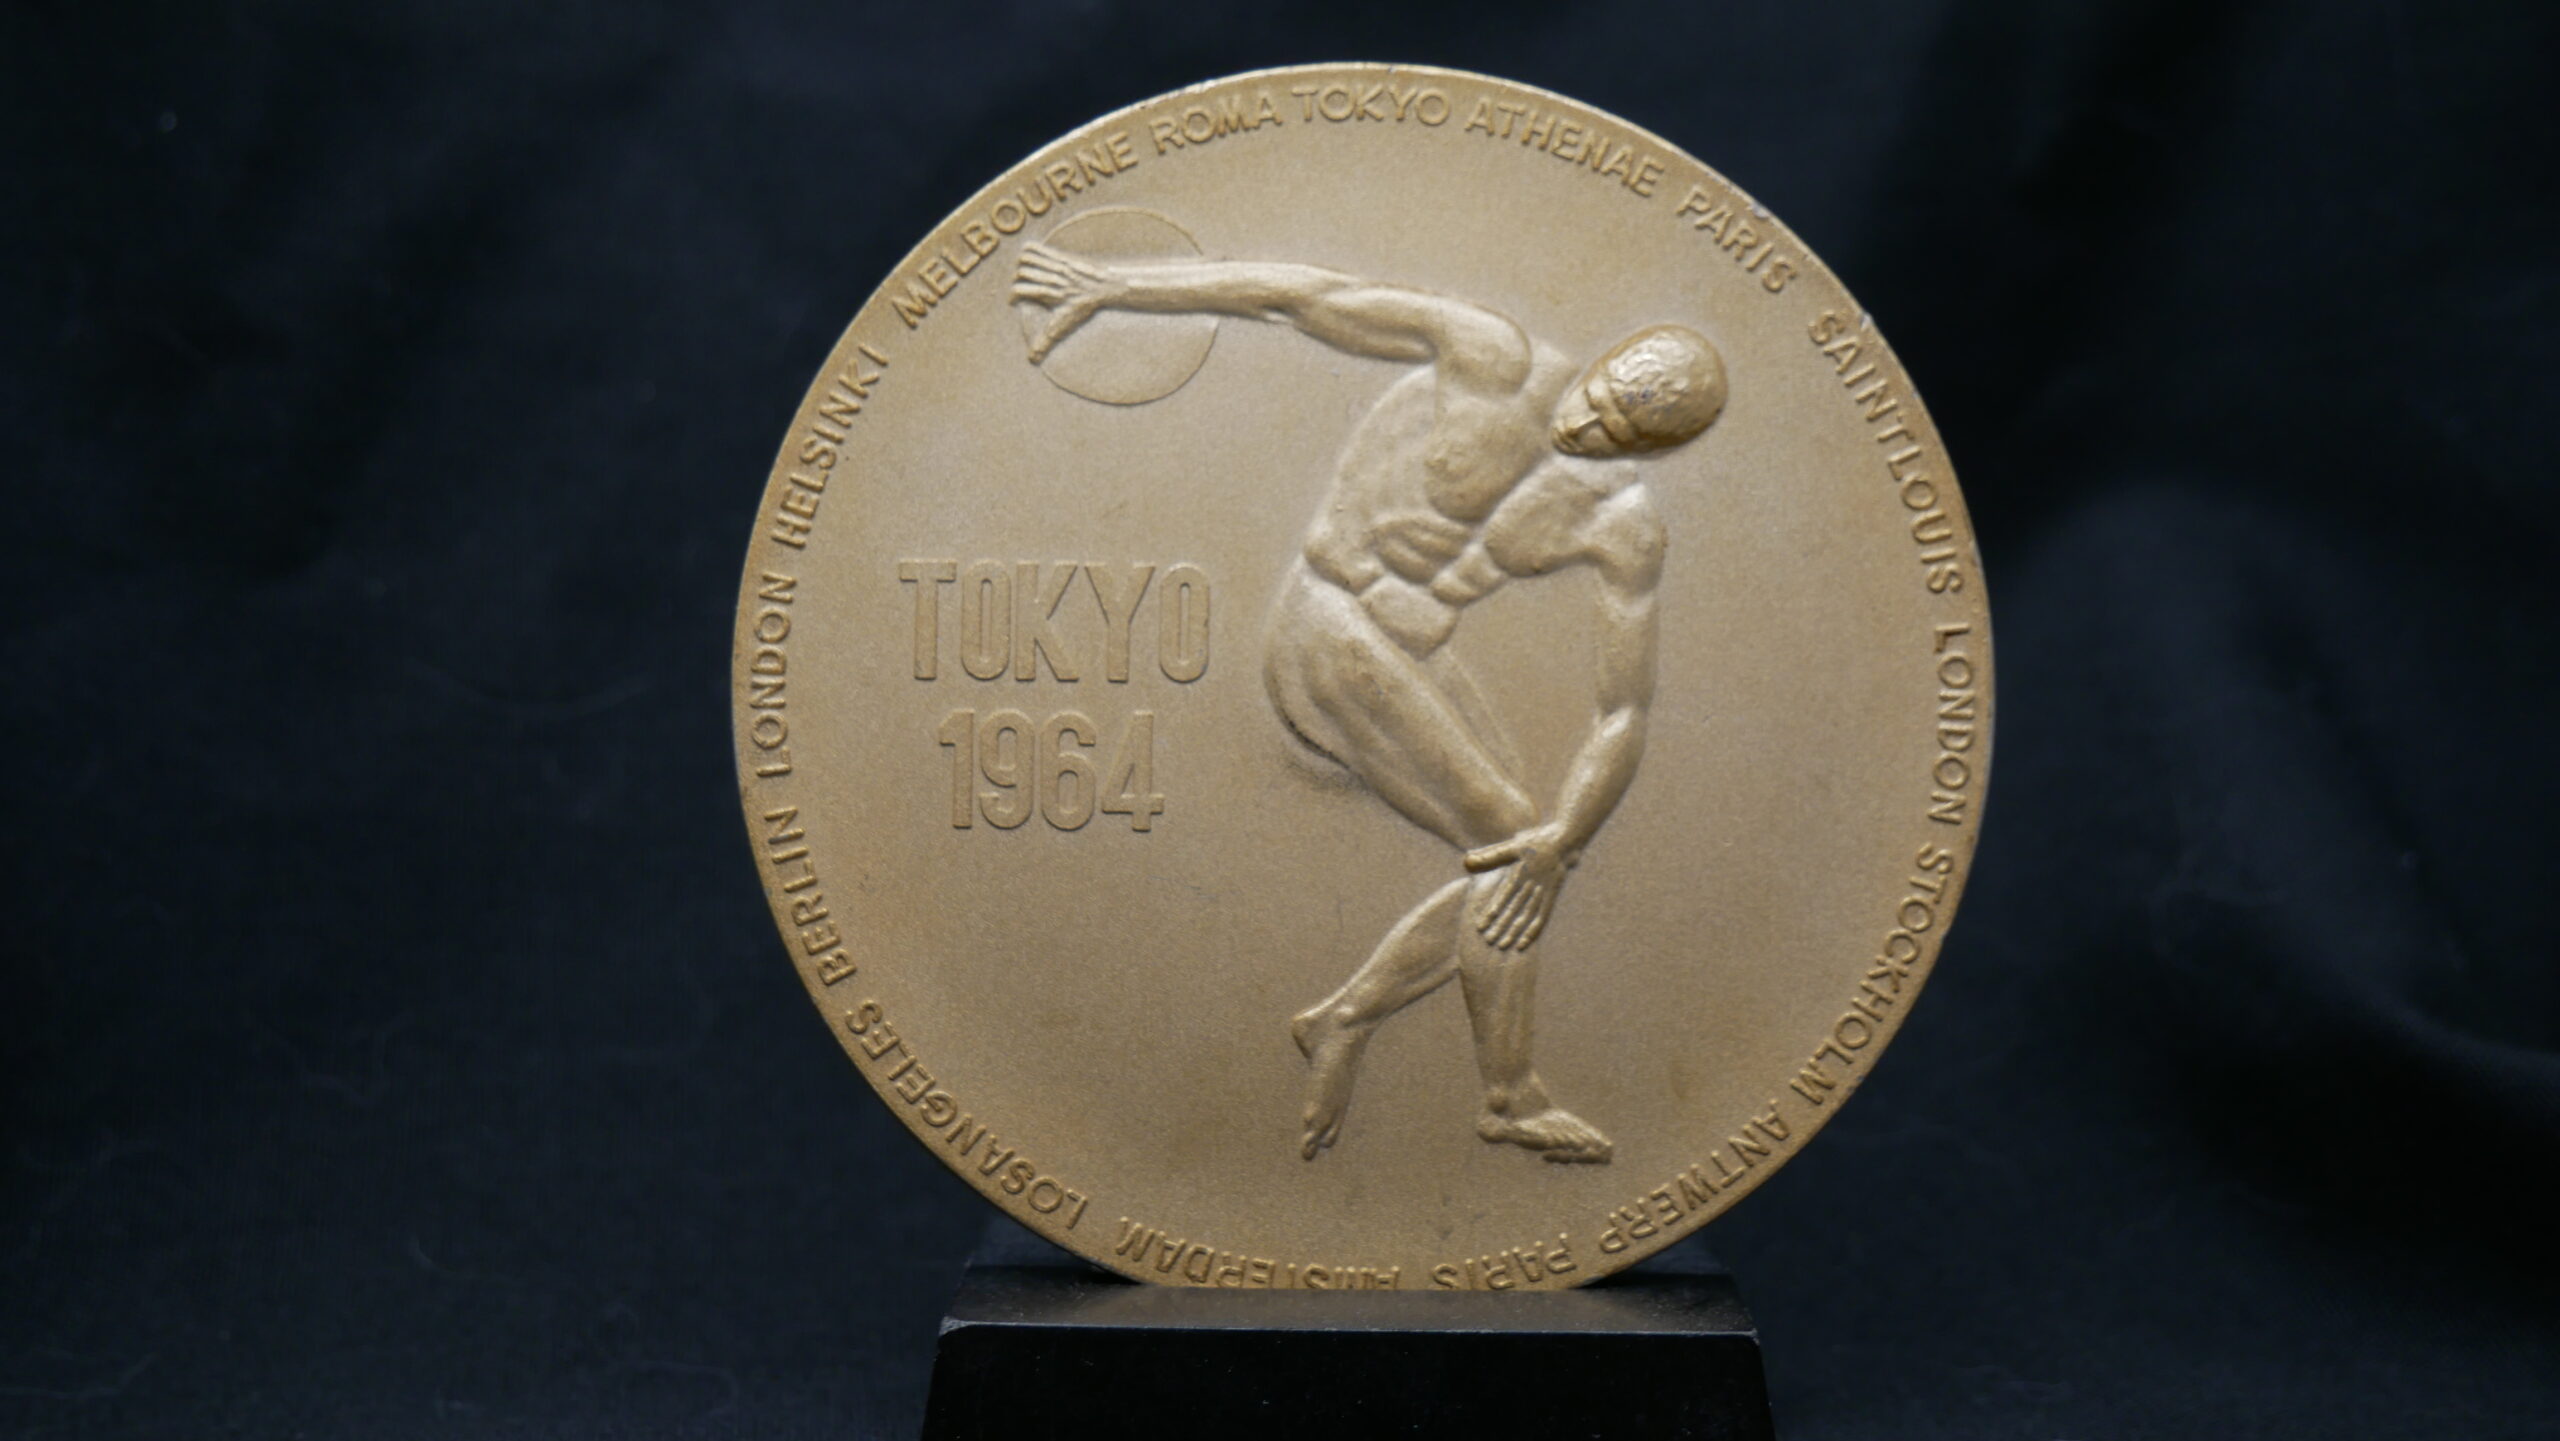 1964 Tokyo Olympics medallion